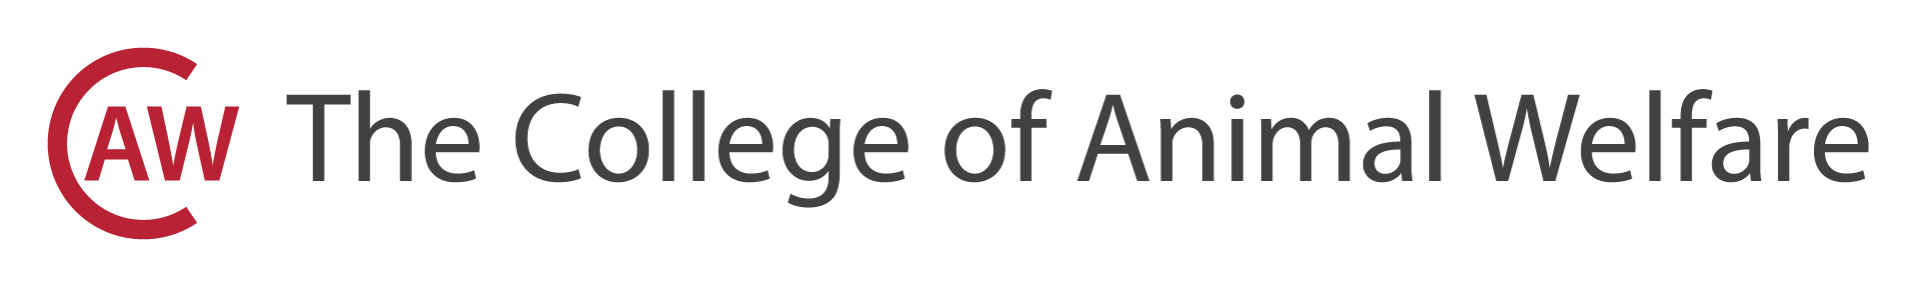 The College of Animal Welfare Logo